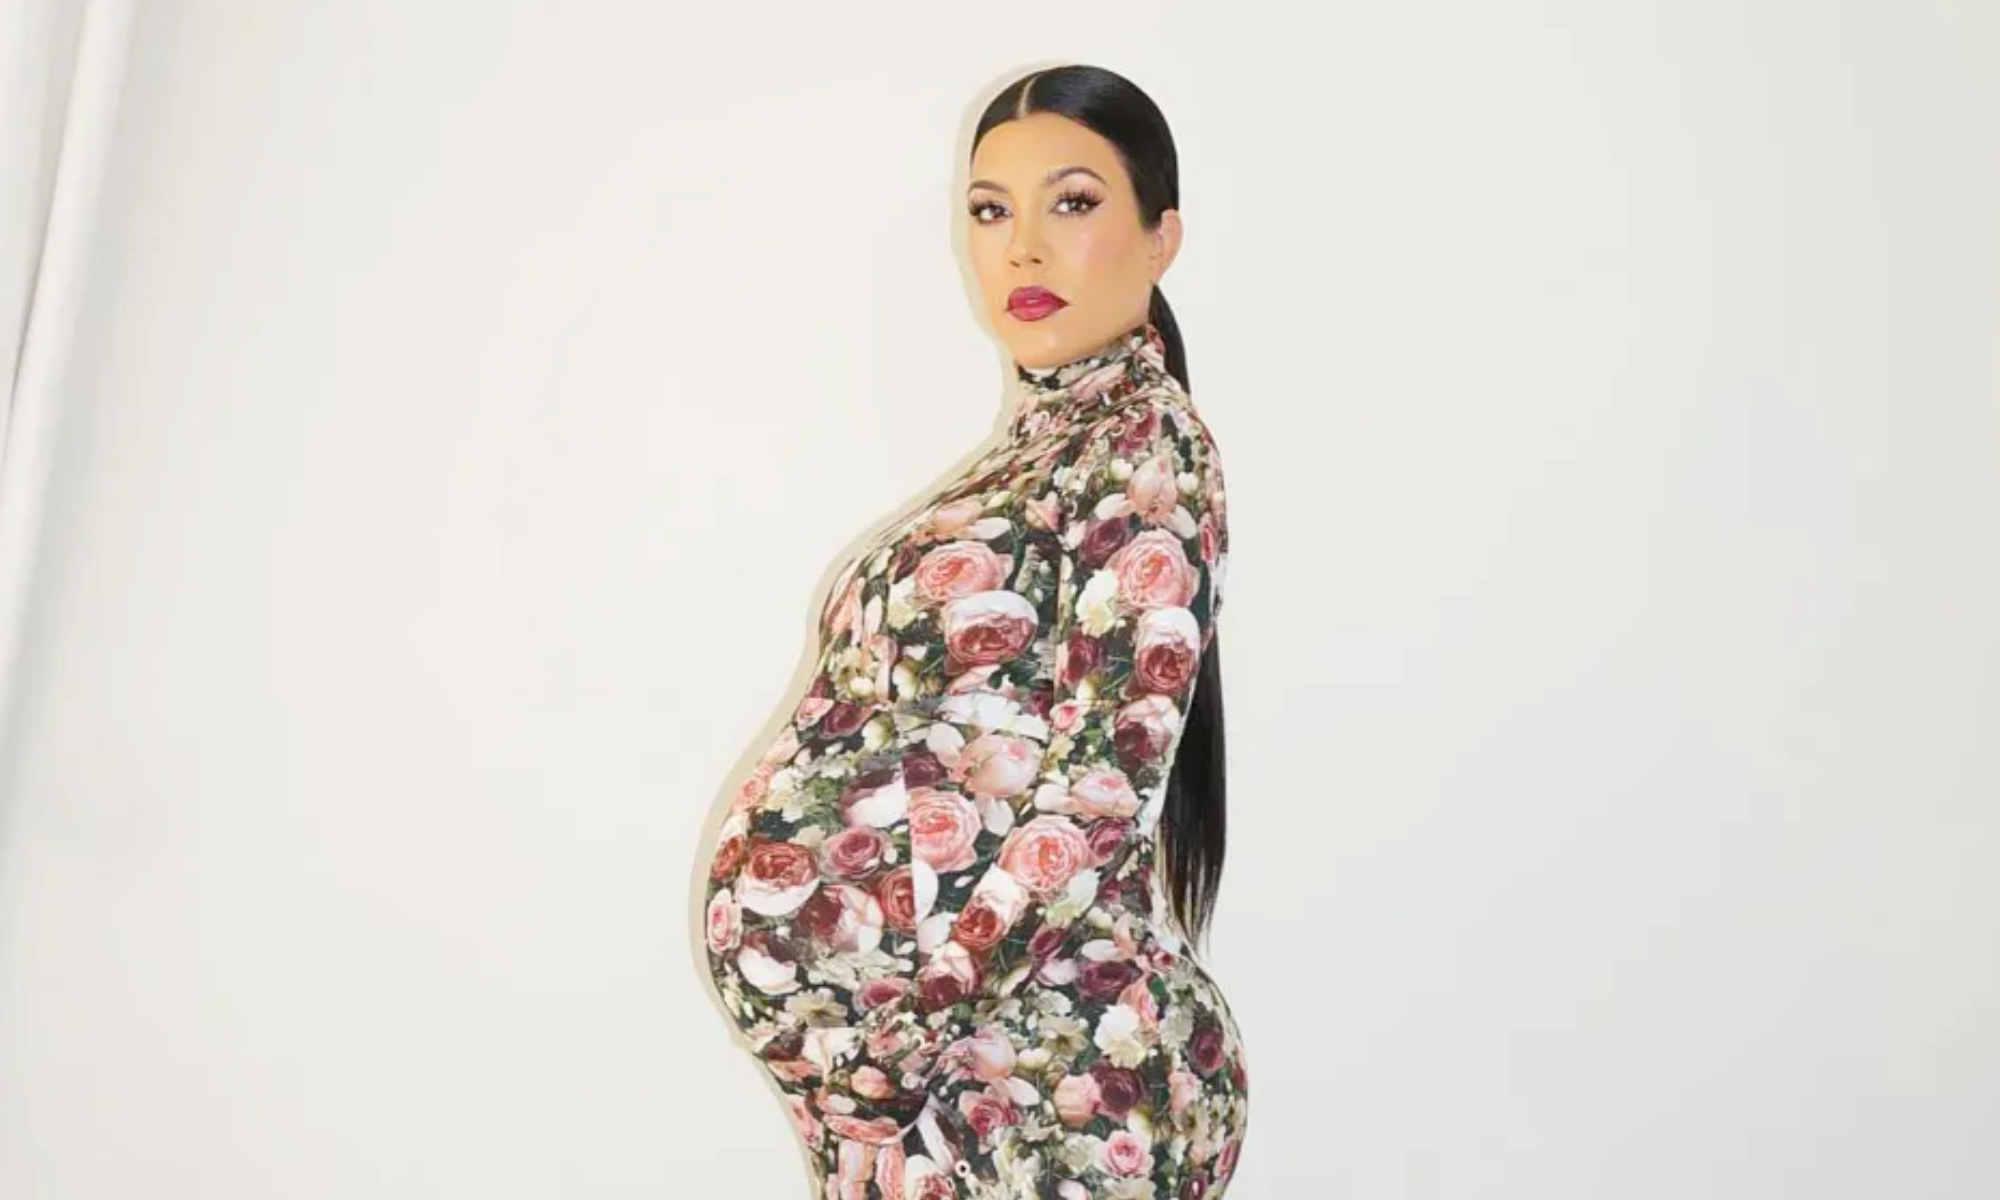 Kourtney Kardashian Kept Her Skin Flawless While Pregnant With This Oxygenetix Foundation